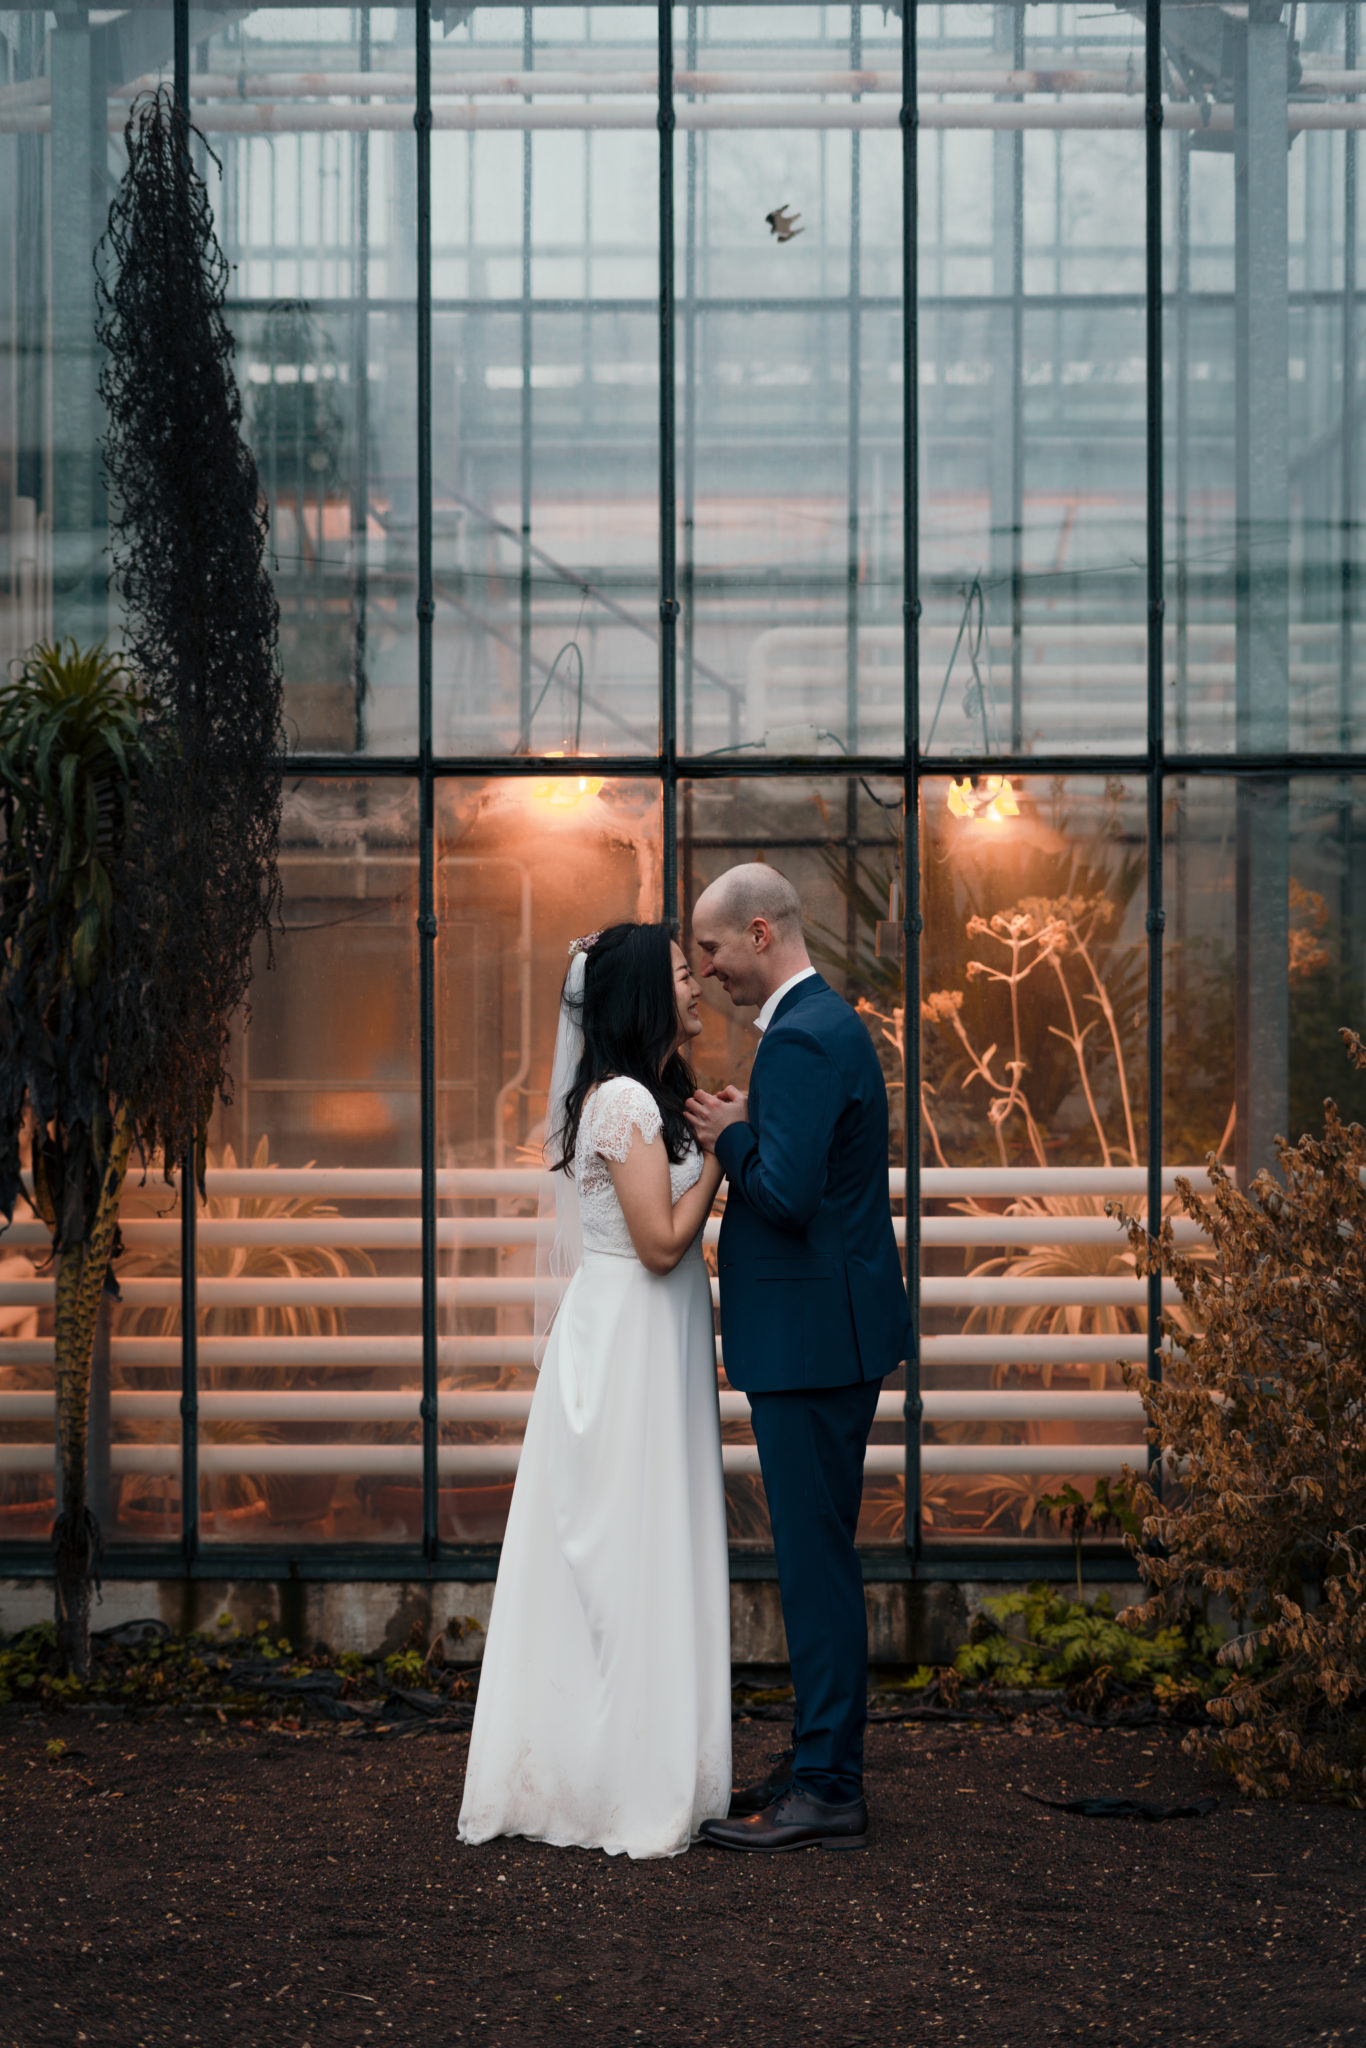 Brautpaar lächelt sich vor dem botanischen Garten in Bonn während After Wedding Shooting an